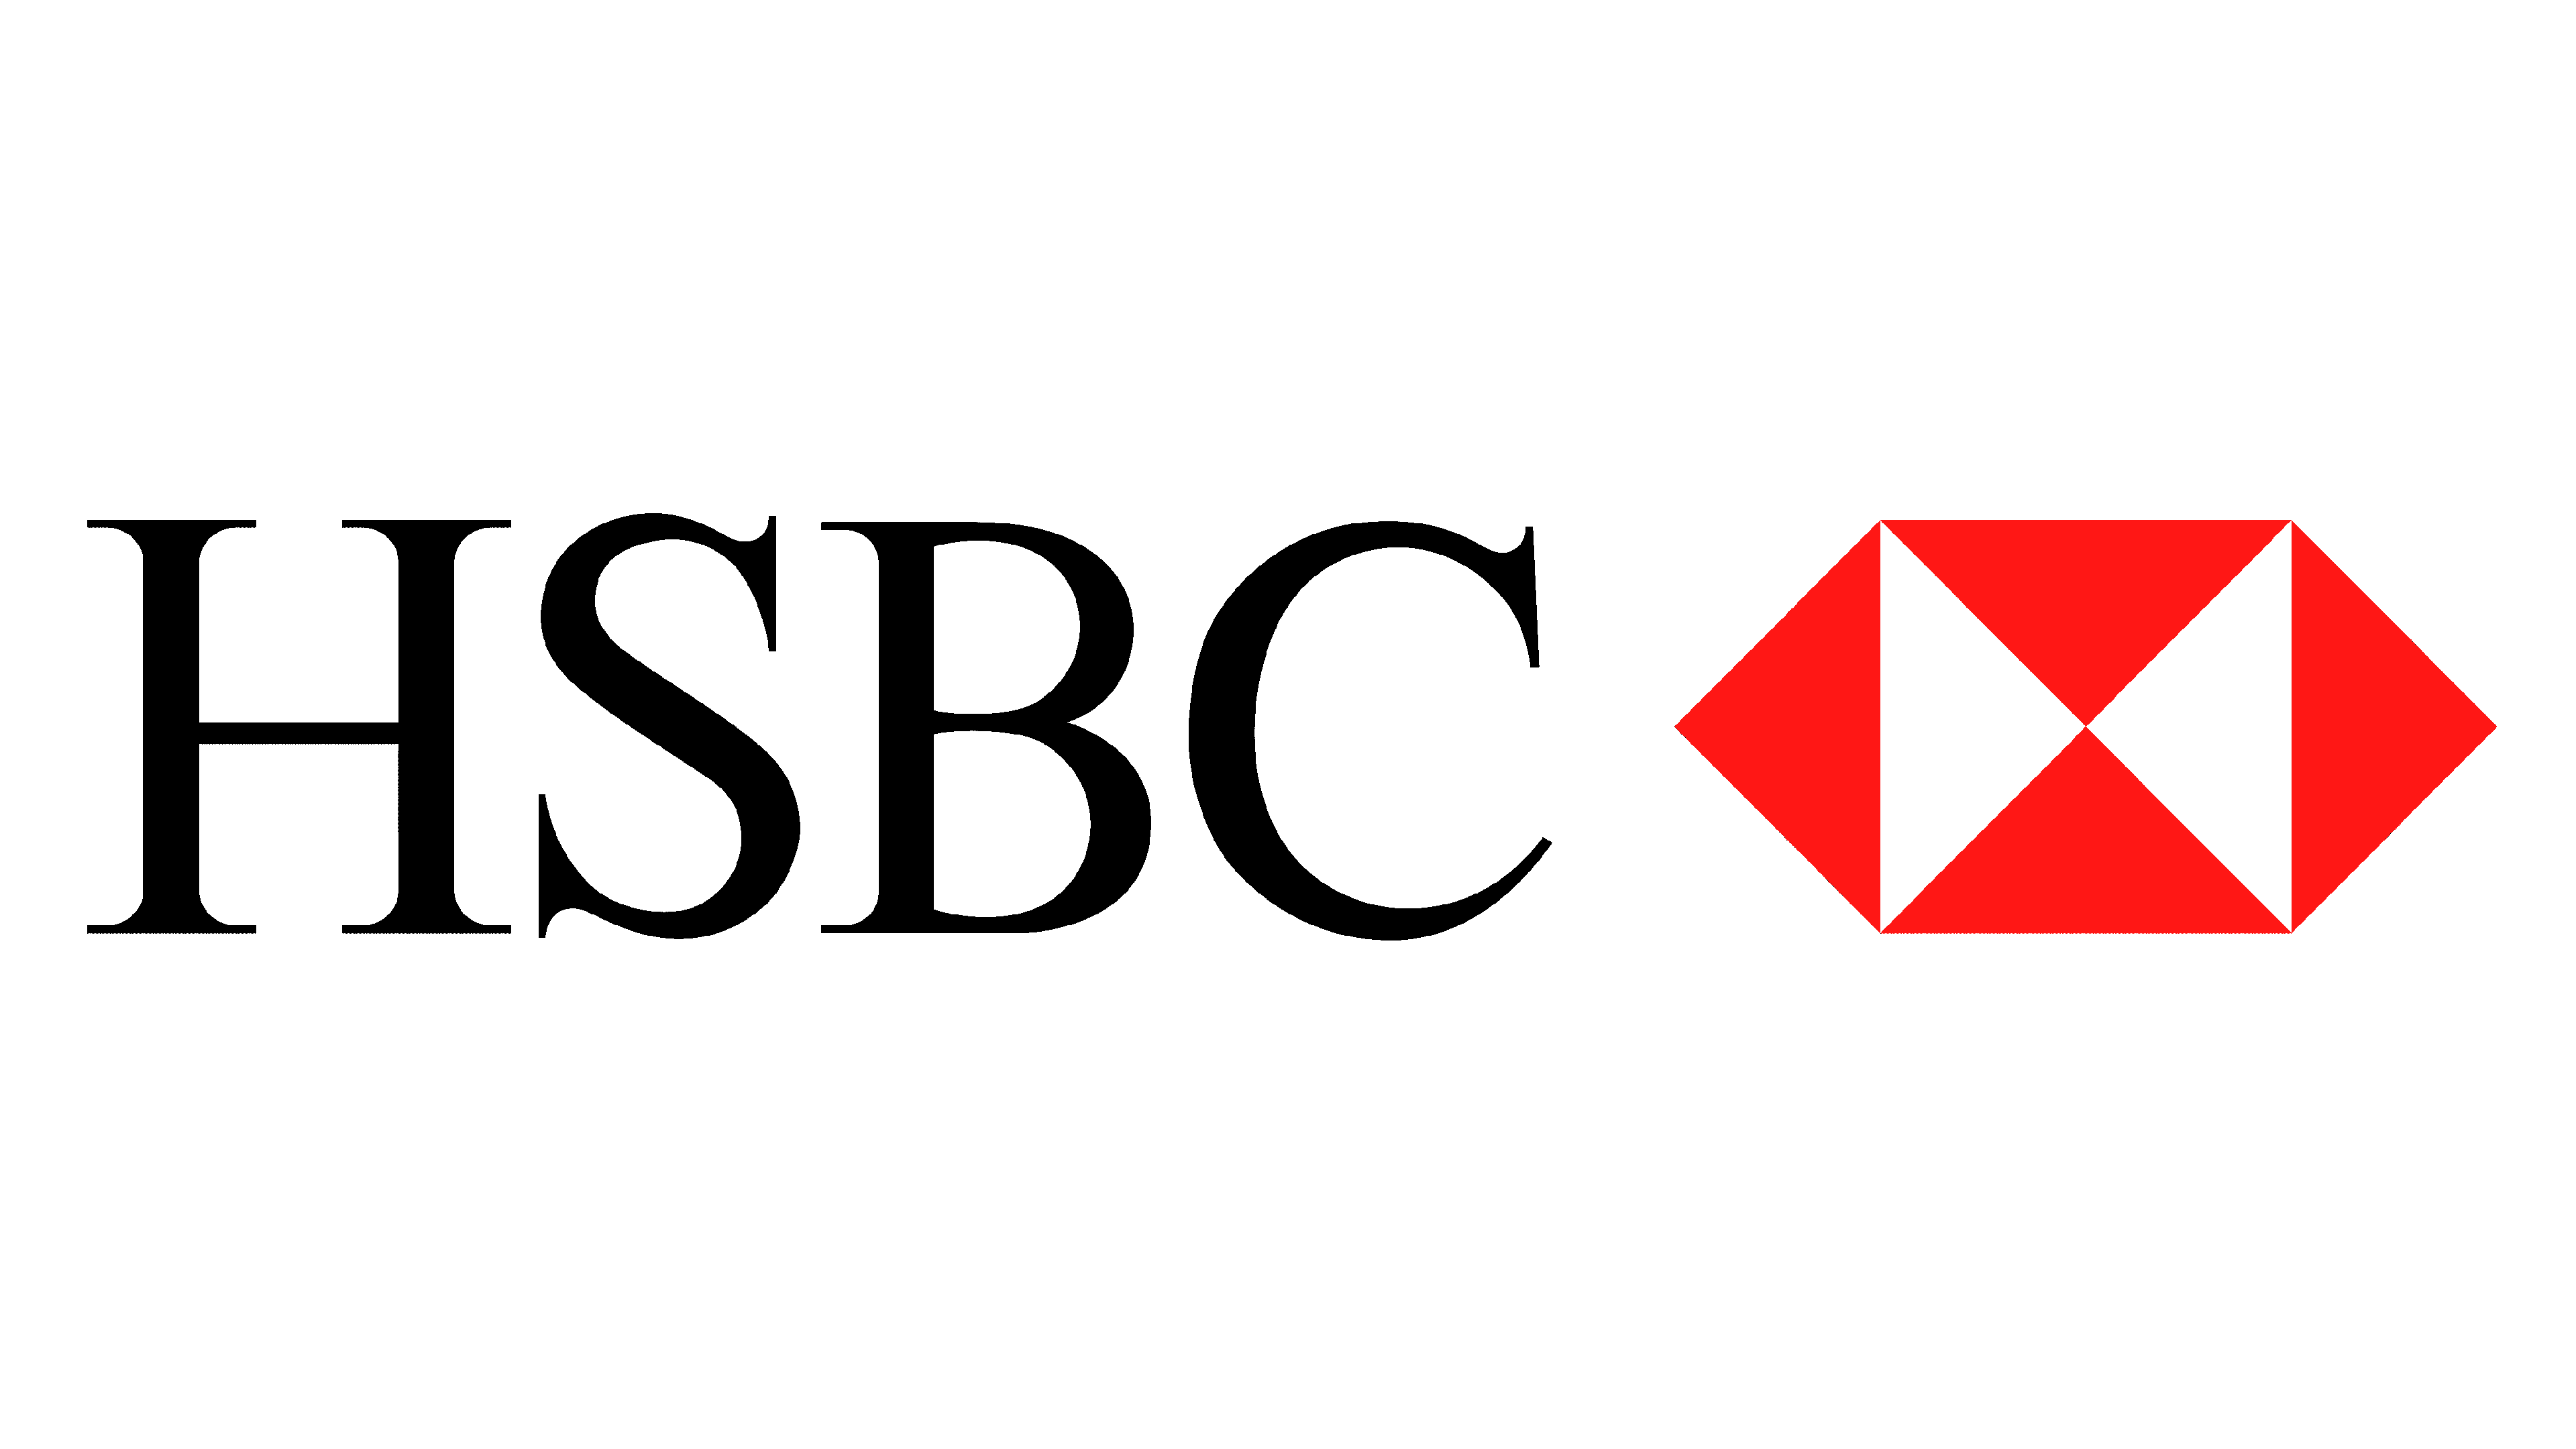 HSBC-Logo-1983